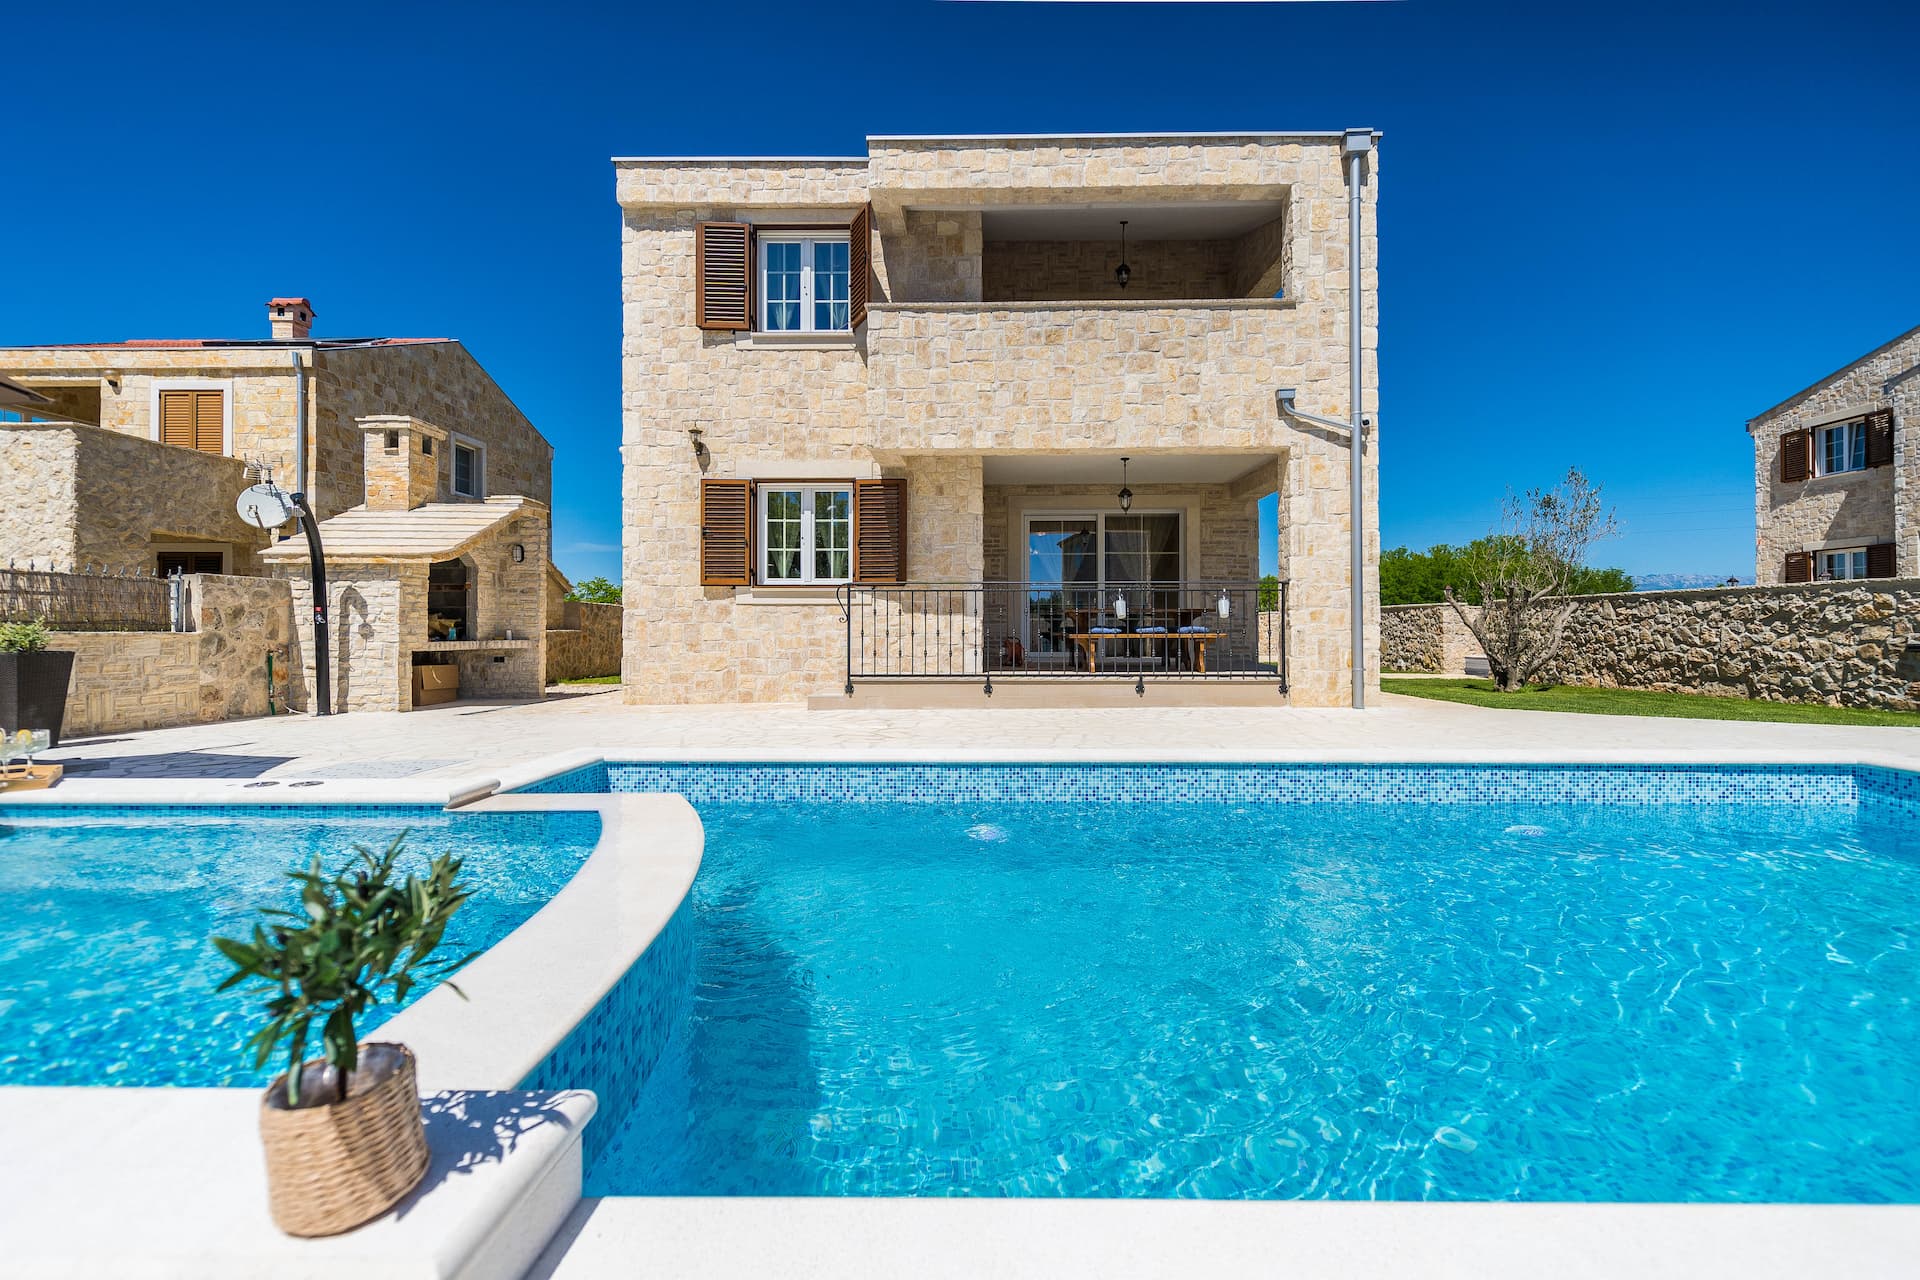 New stone villa with pool near the beach